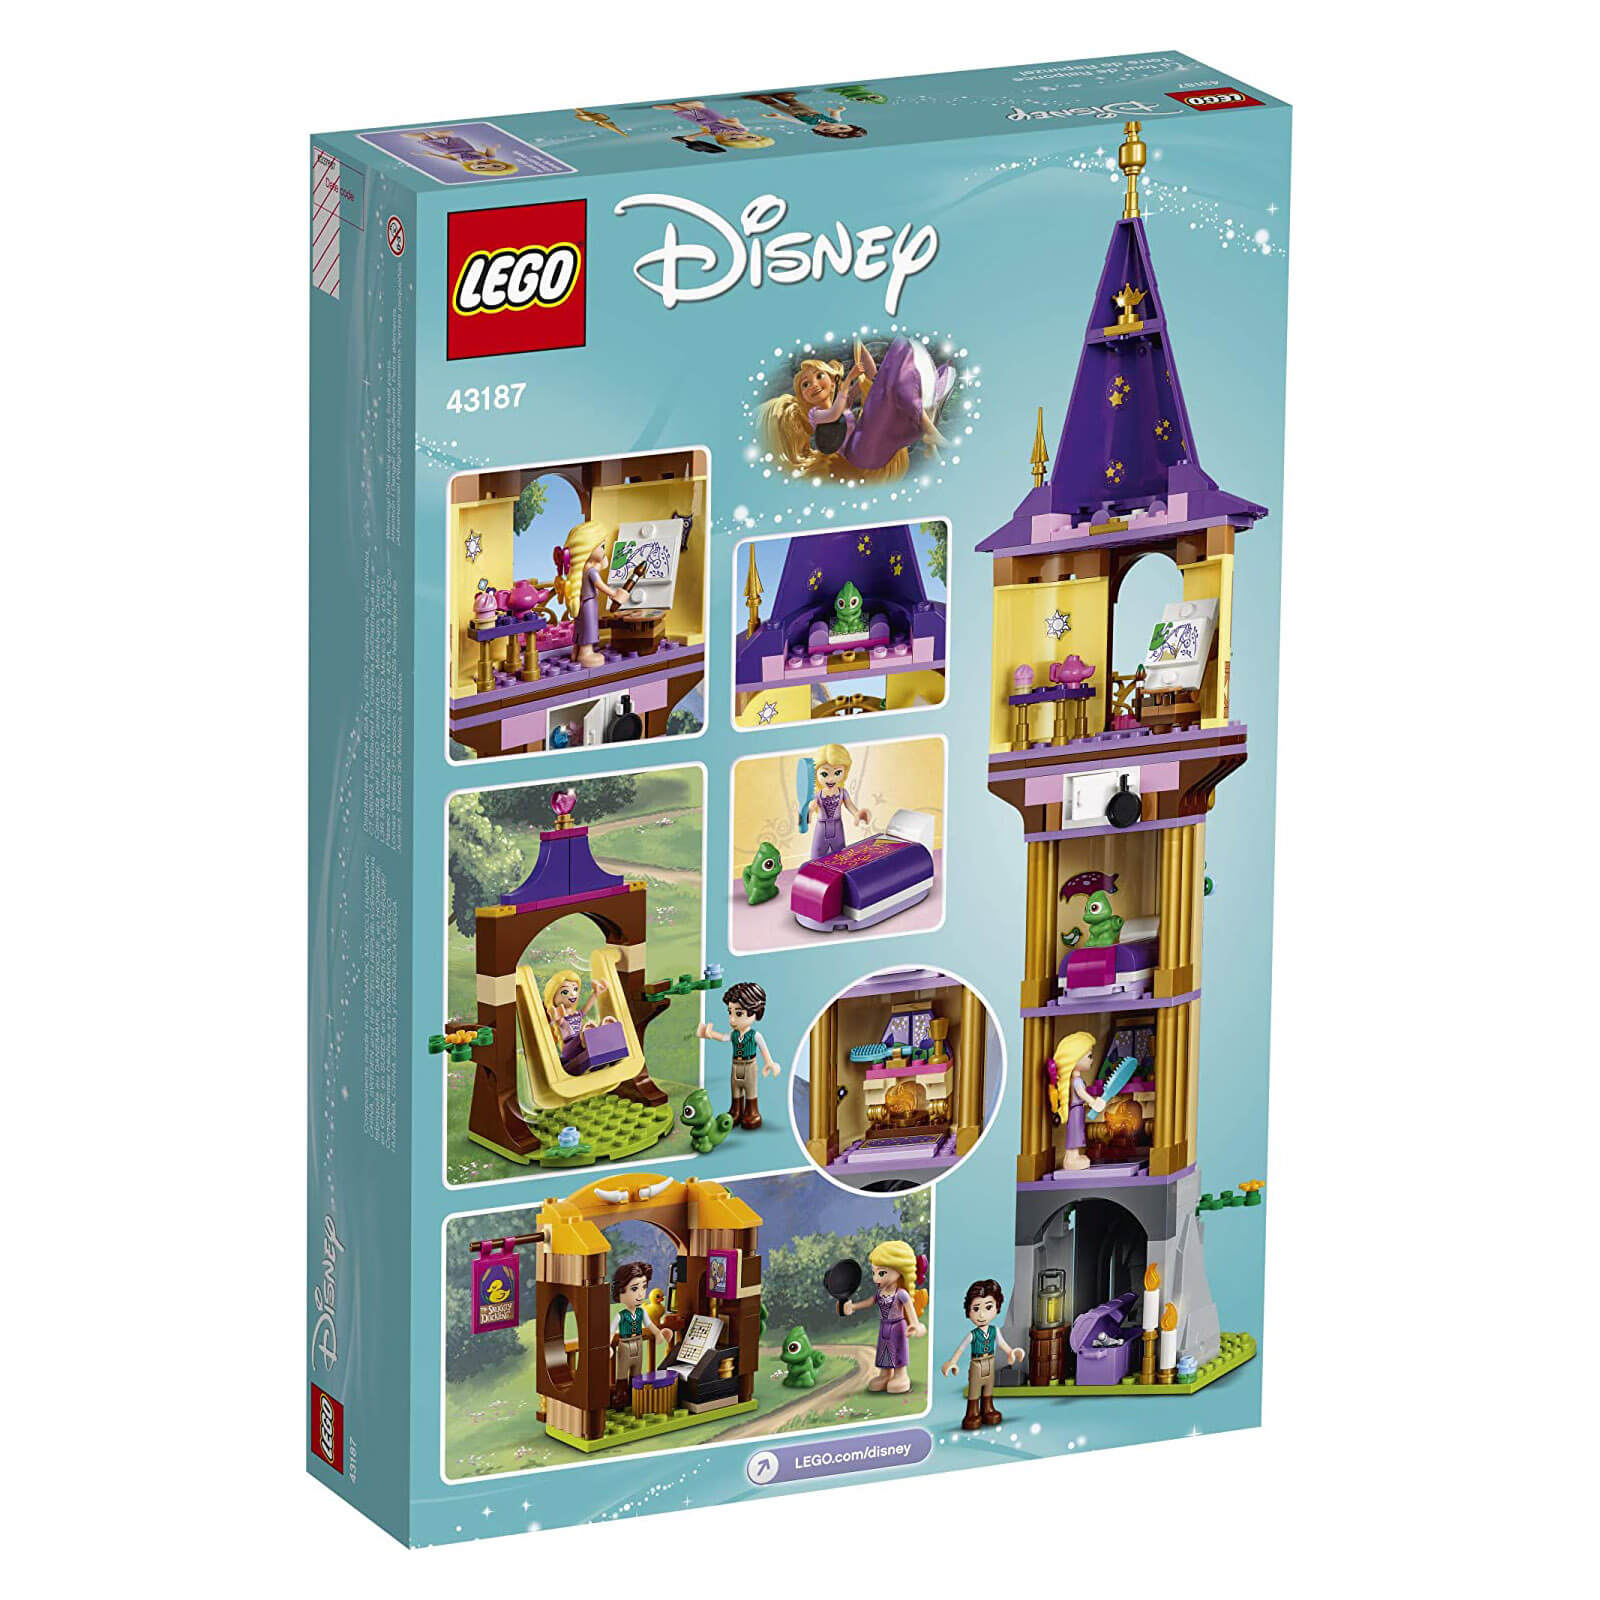 LEGO Disney Princess Rapunzel's Tower 369 Piece Building Set (43187)